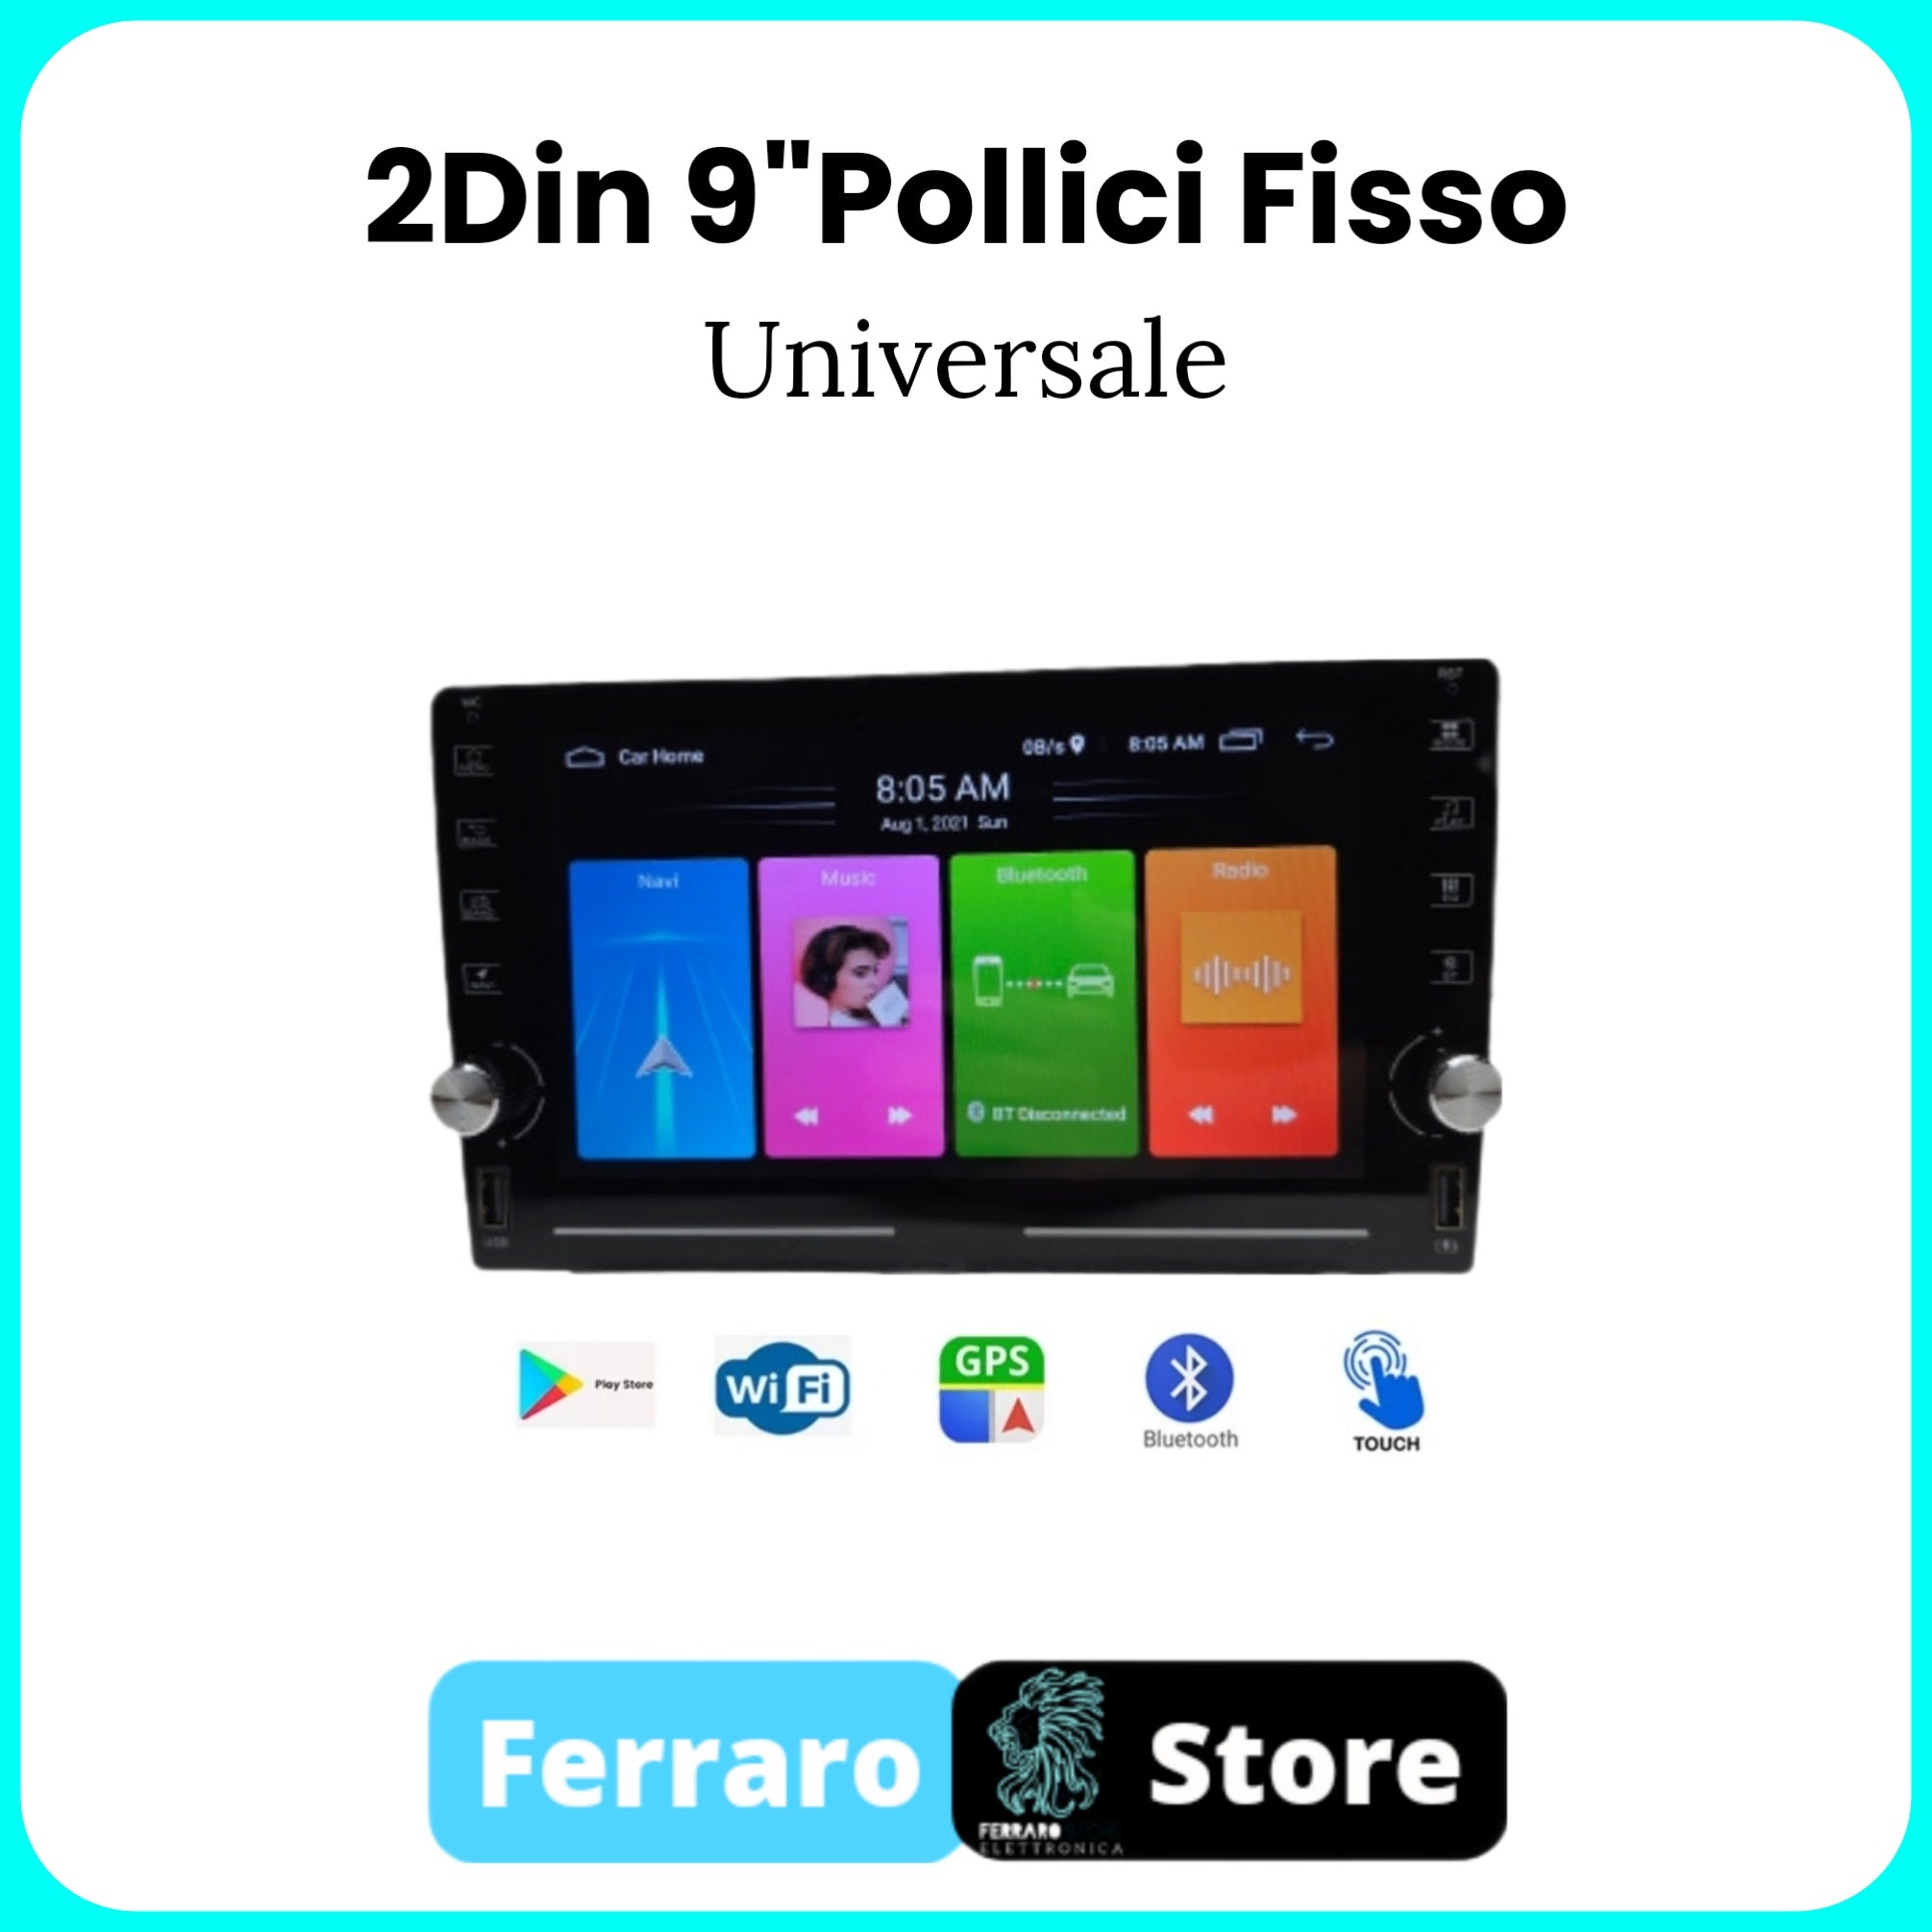 Autoradio Universale [FISSO] - 2Din 9"Pollici, Android, Bluetooth, Radio RDS, PlayStore, Youtube, Navigatore, GPS, Wifi